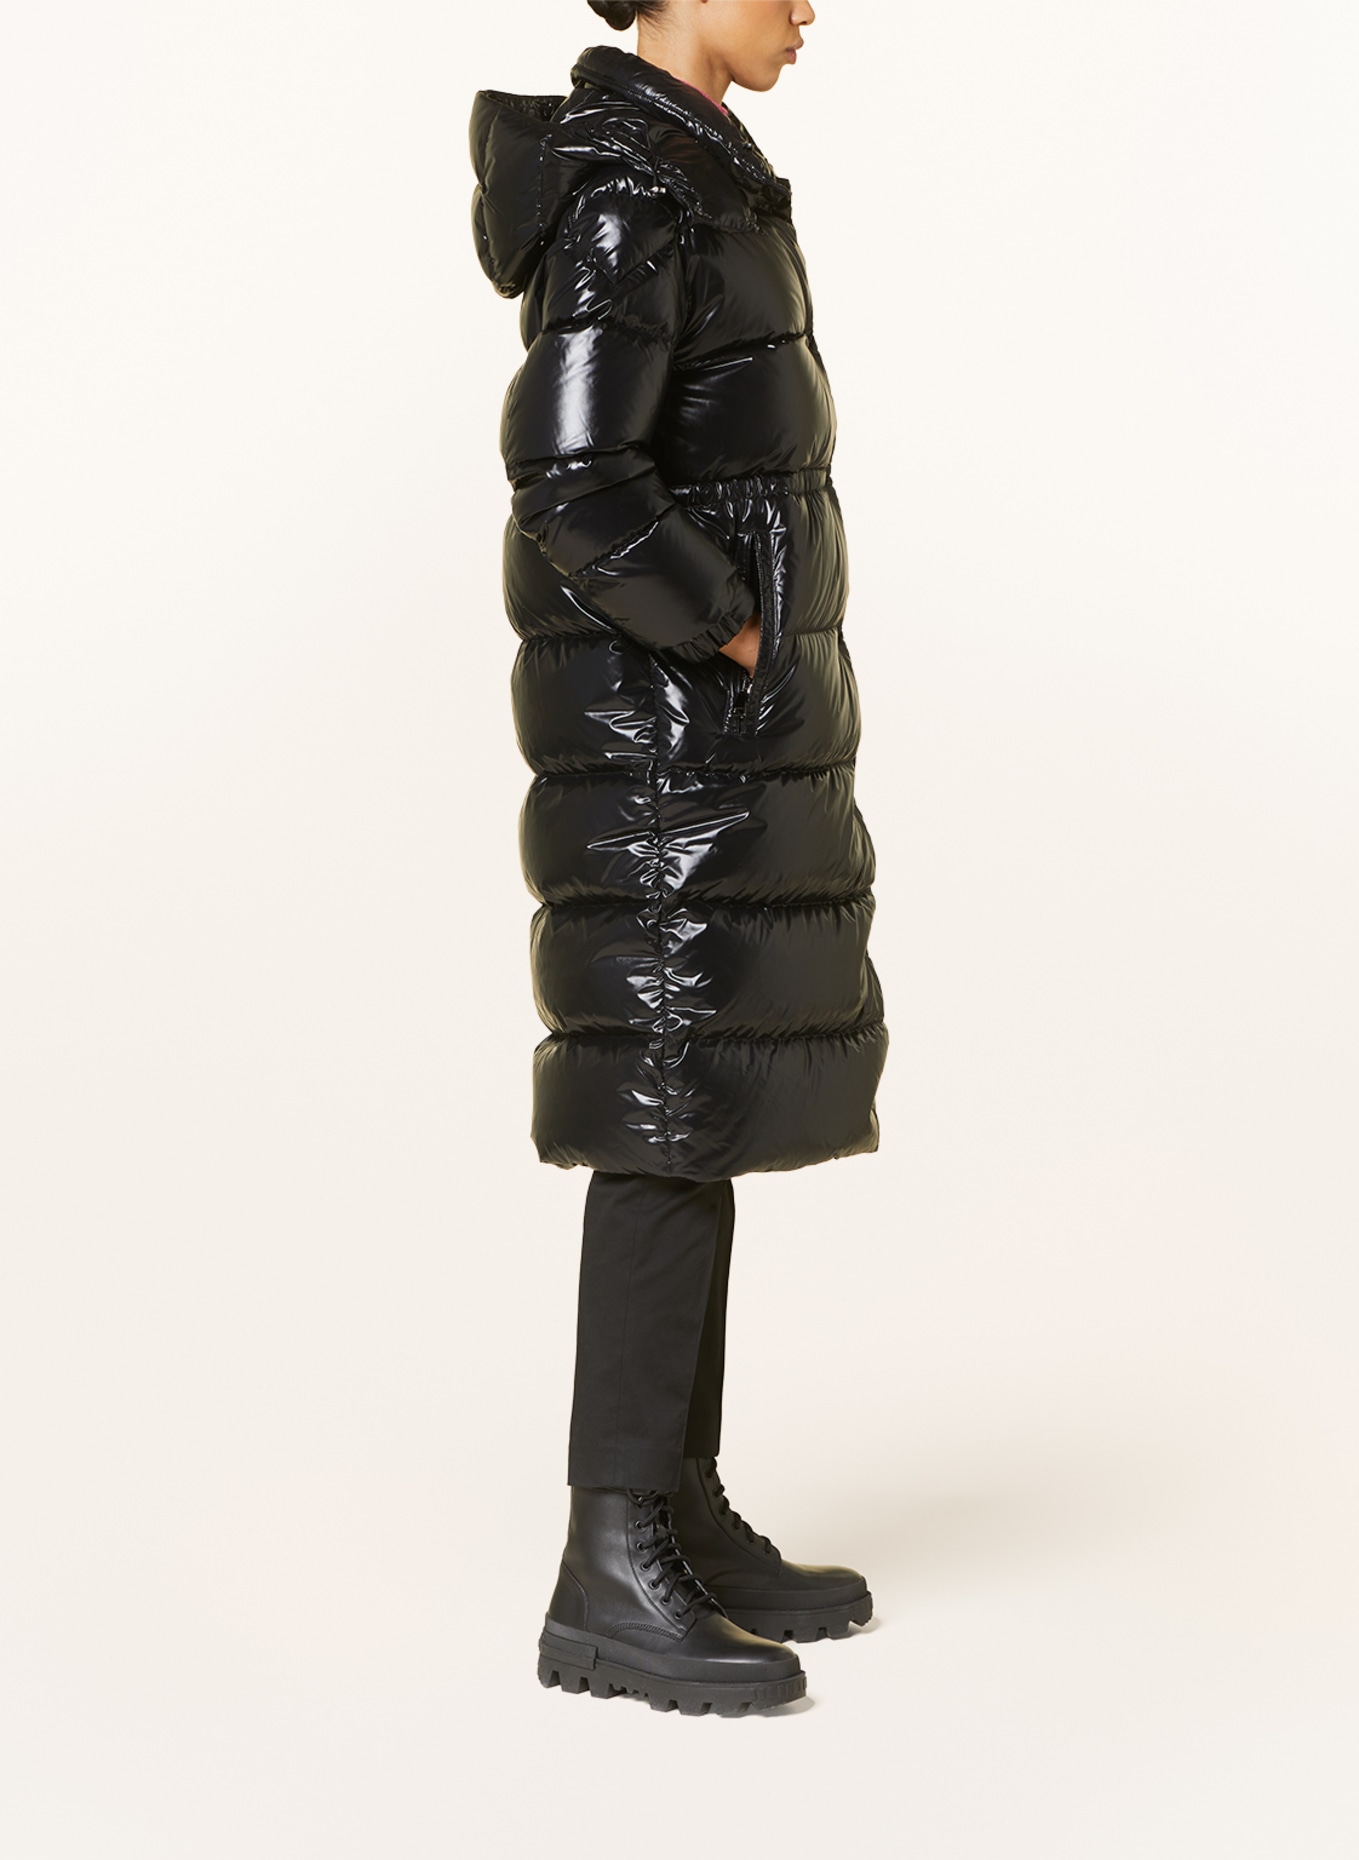 MONCLER Daunenmantel CAVETTAZ mit abnehmbarer Kapuze, Farbe: SCHWARZ (Bild 4)